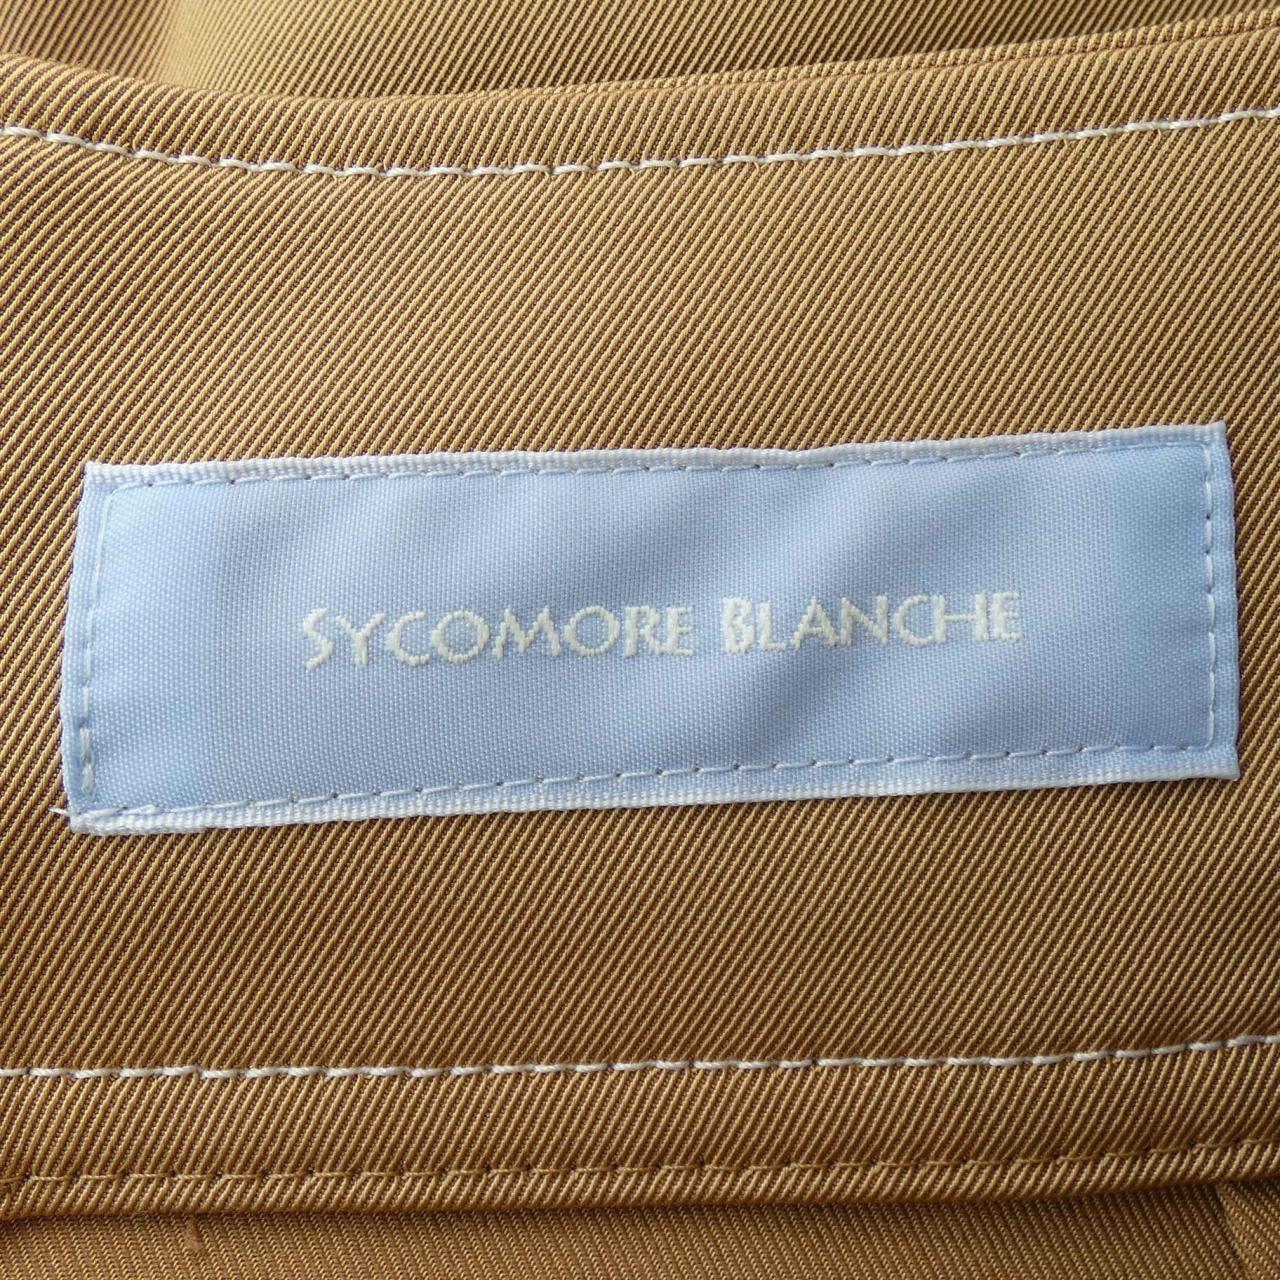 SYCOMORE BLANCHE スカート